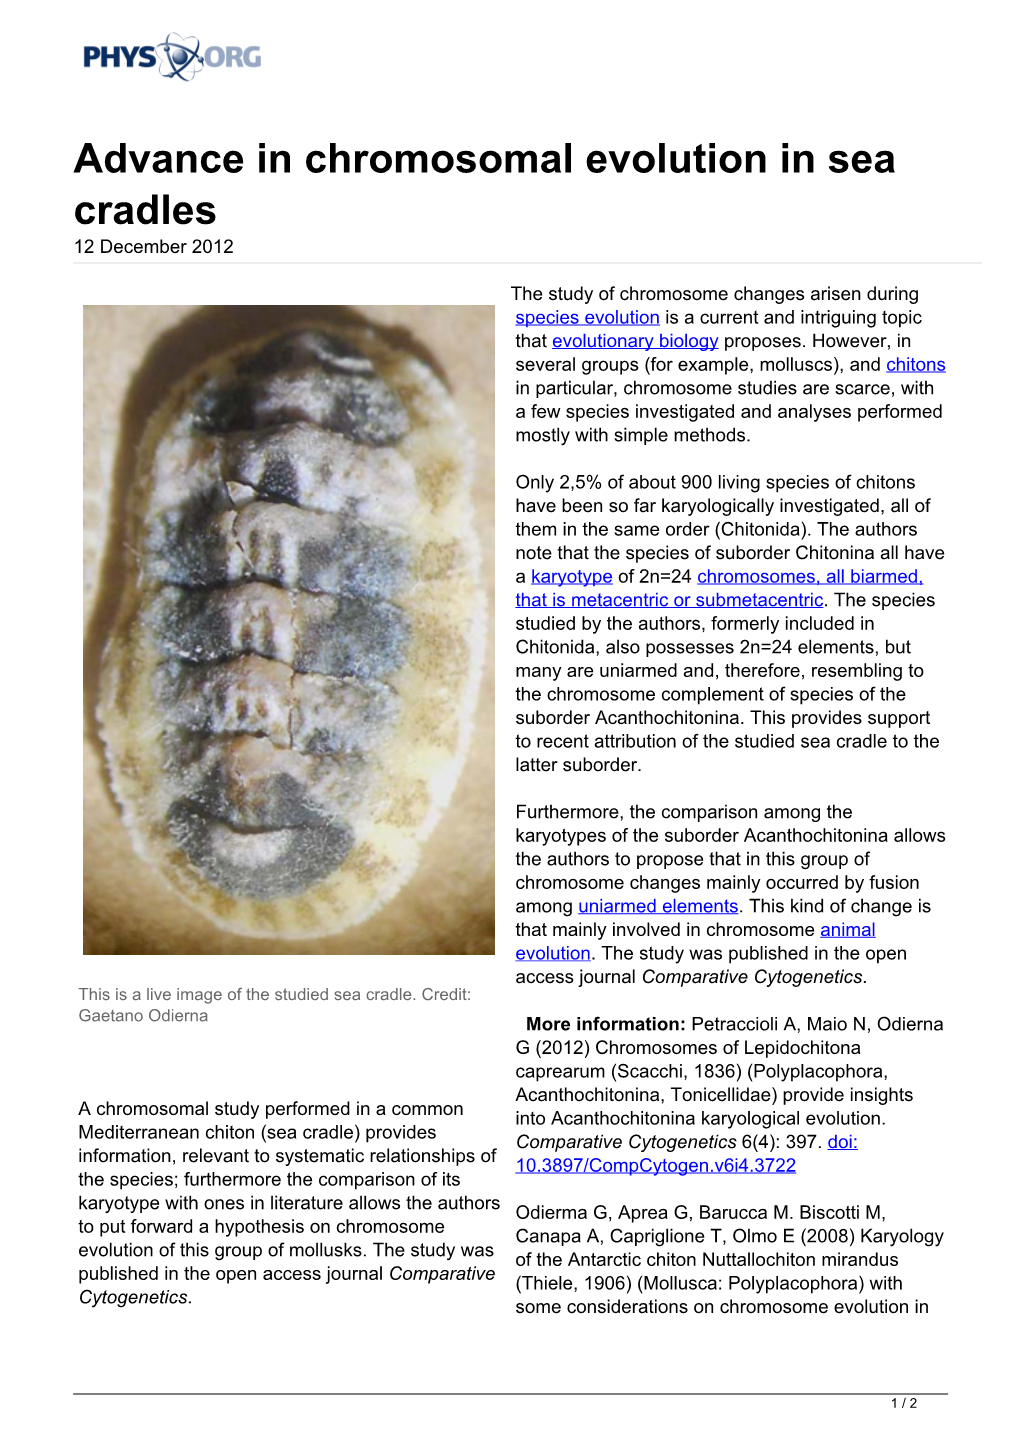 Advance in Chromosomal Evolution in Sea Cradles 12 December 2012